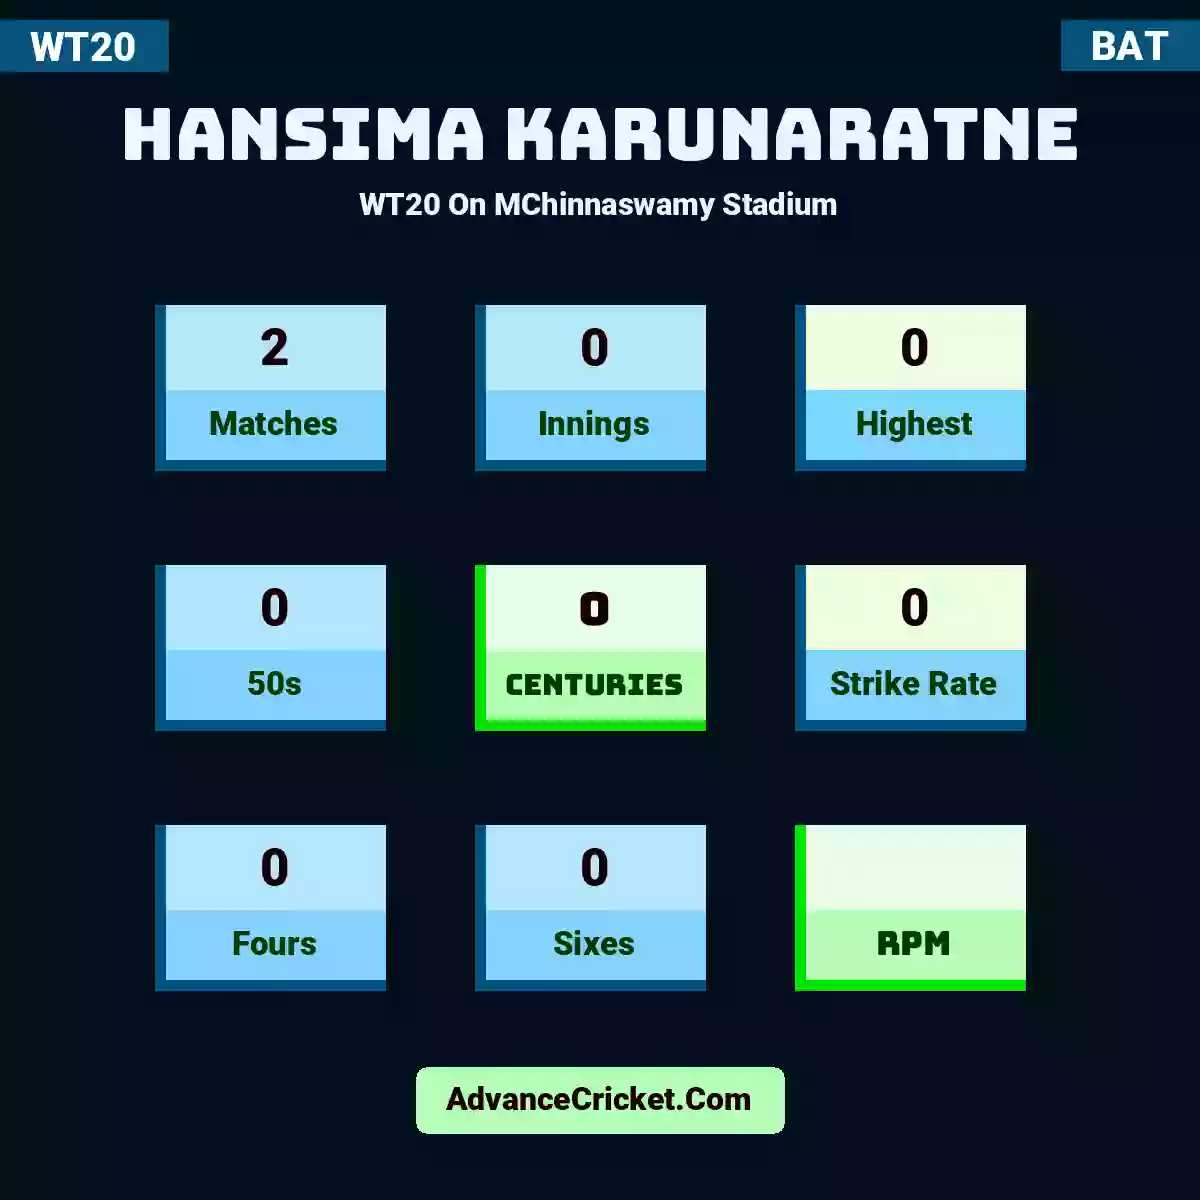 Hansima Karunaratne WT20  On MChinnaswamy Stadium, Hansima Karunaratne played 2 matches, scored 0 runs as highest, 0 half-centuries, and 0 centuries, with a strike rate of 0. H.Karunaratne hit 0 fours and 0 sixes.